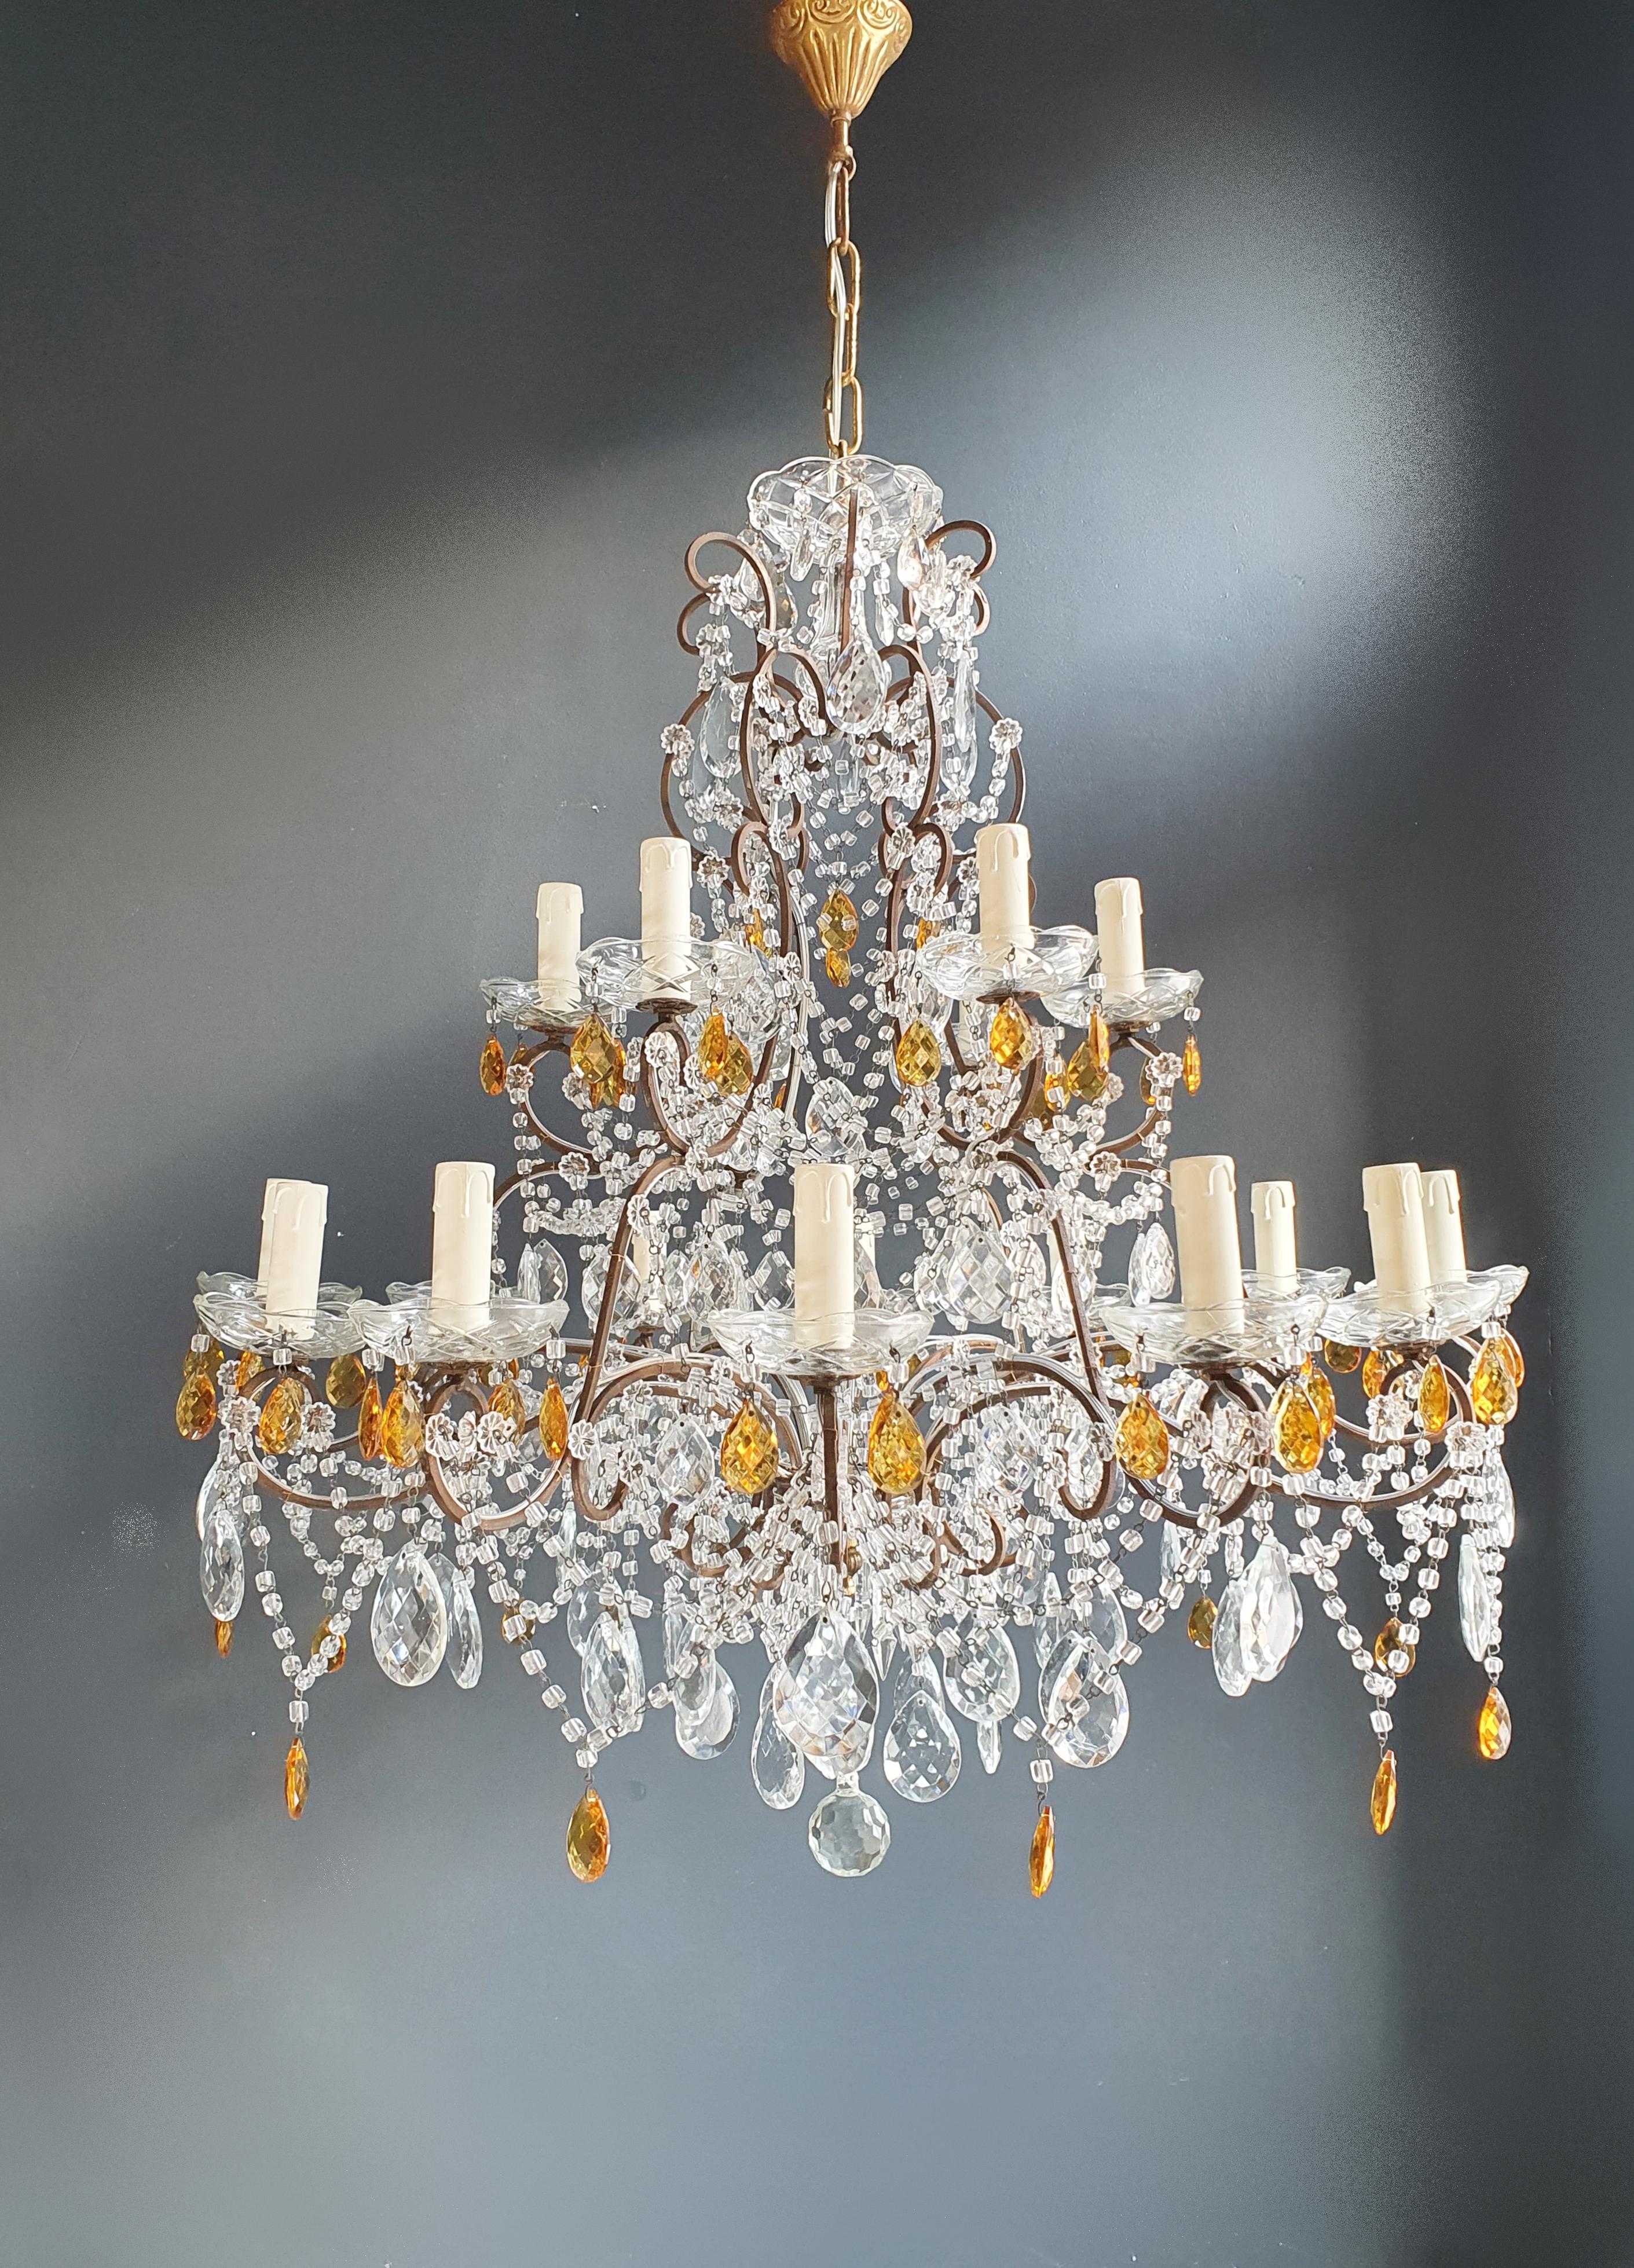 Italian Amber Crystal Antique Chandelier Ceiling Florentiner Lustre Art Nouveau For Sale